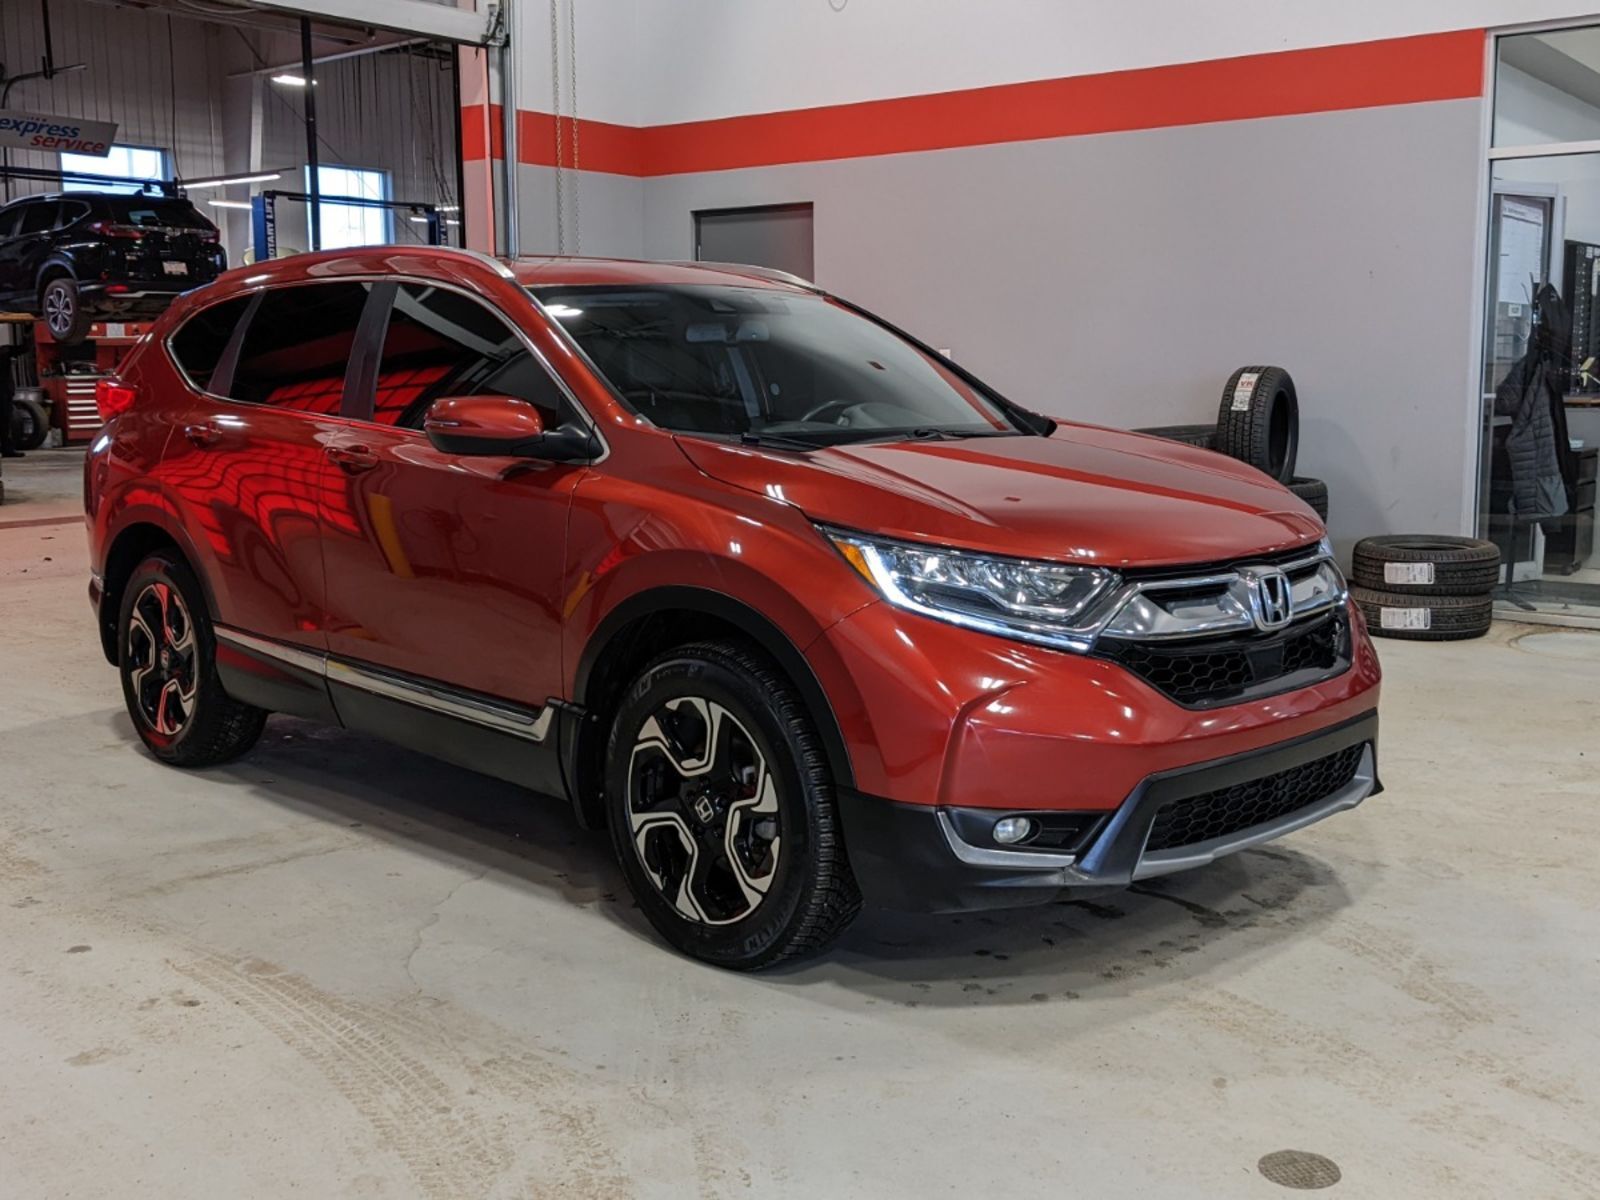 2019 Honda CR-V Touring - Leather, navigation, sunroof